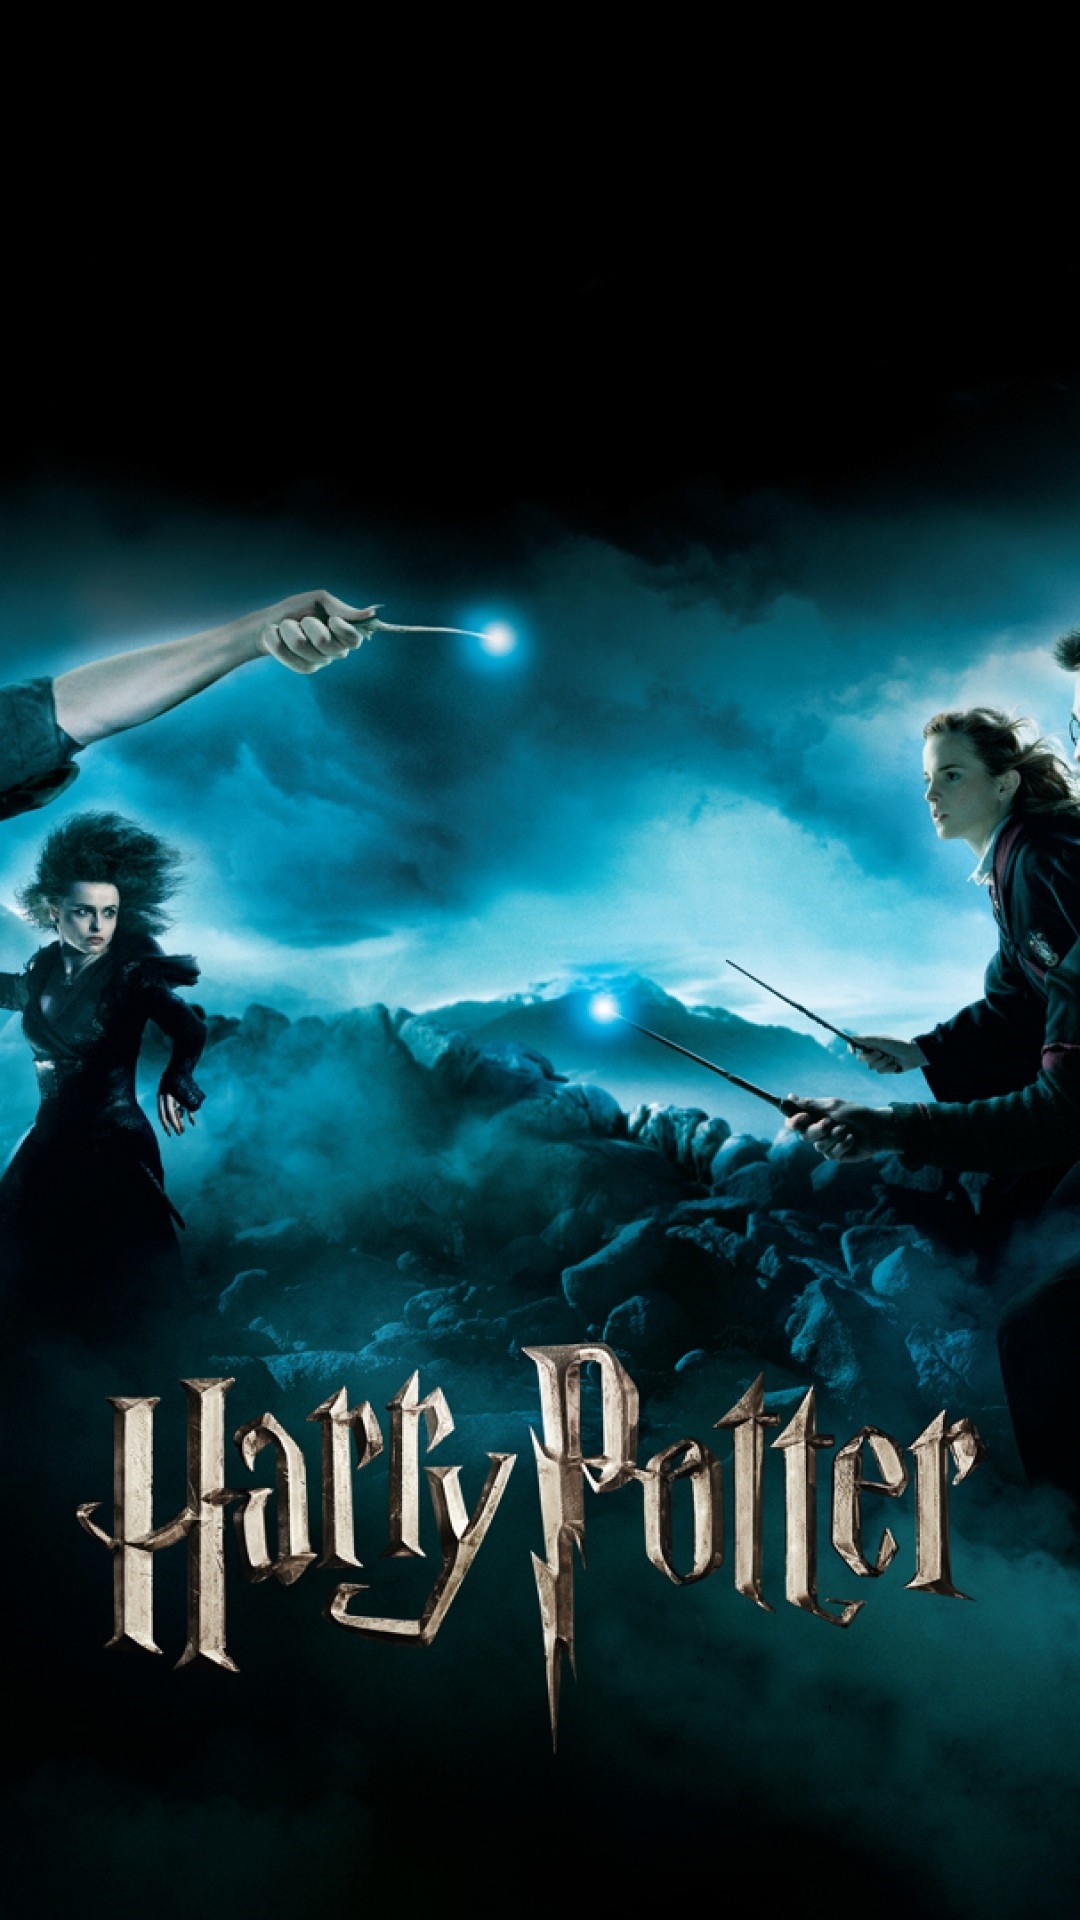 1080x1920 ... Harry Potter Wallpaper Iphone harry potter iphone wallpaper4